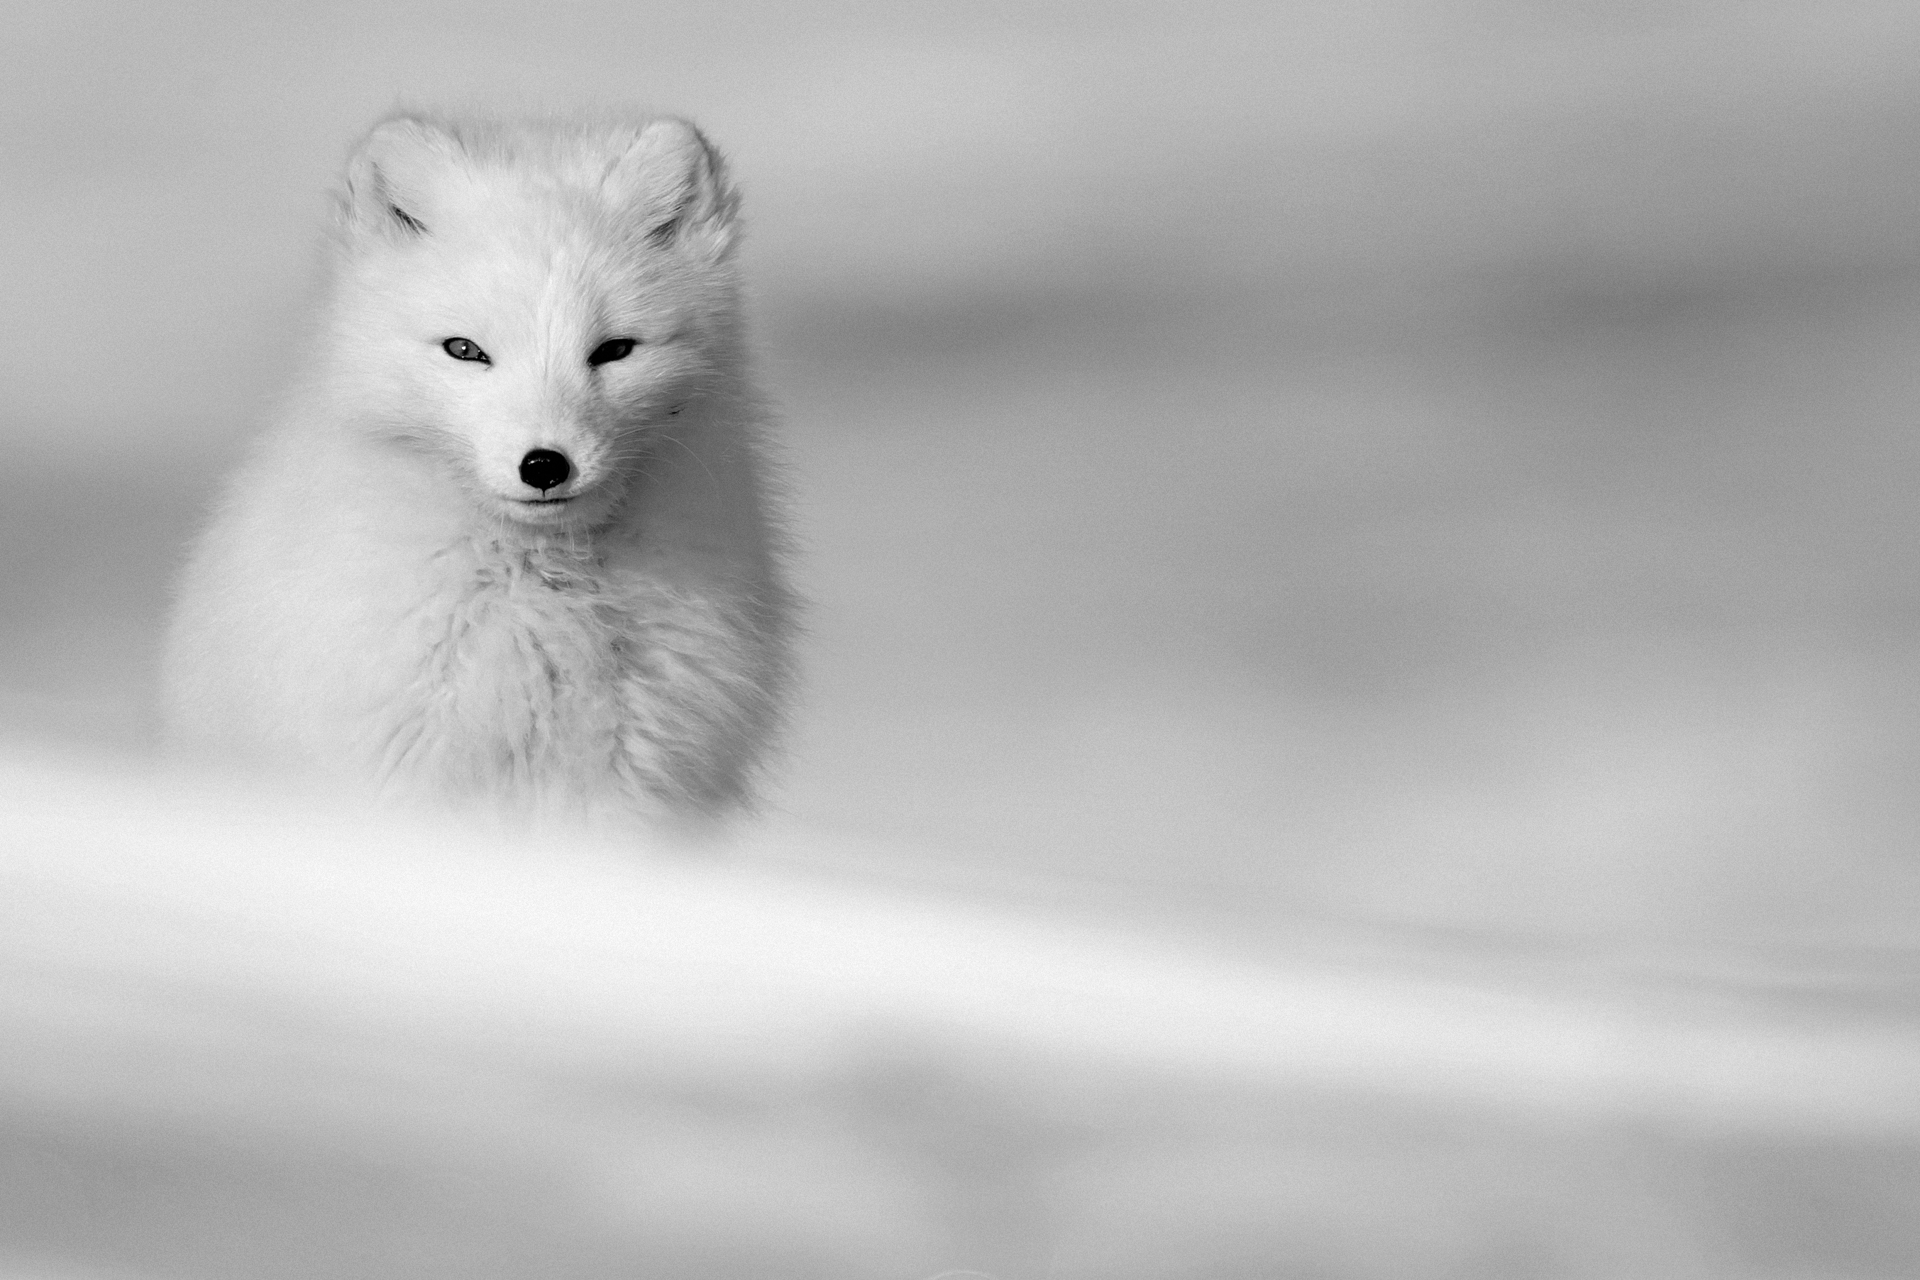 Arctic fox running across windy snow scape toward viewer.  